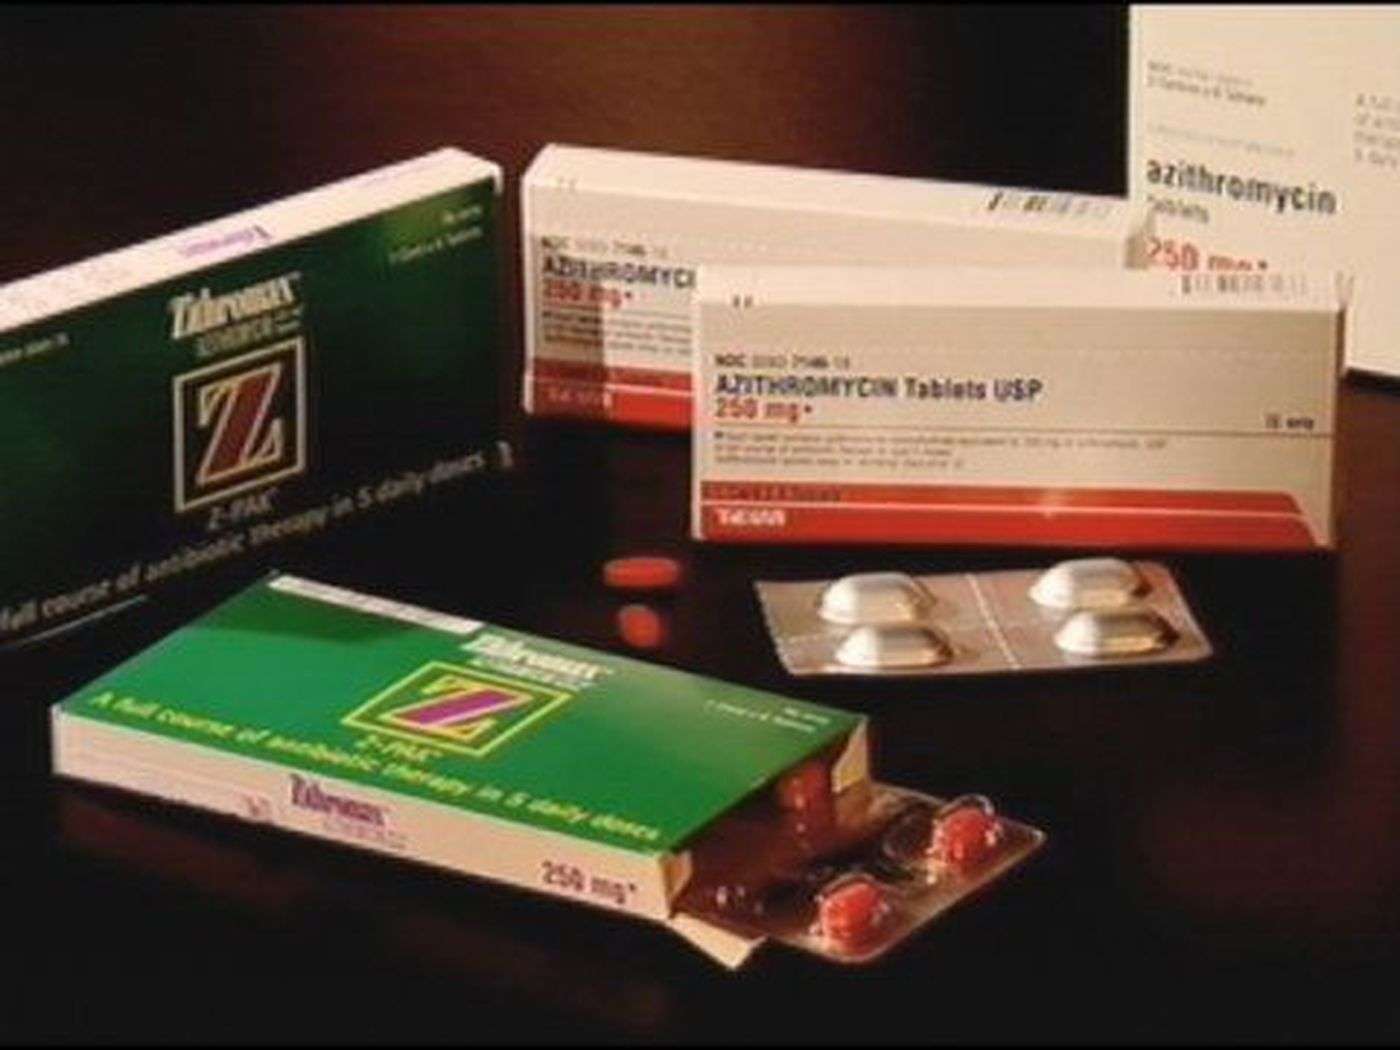 Warning for popular antibiotic, Z